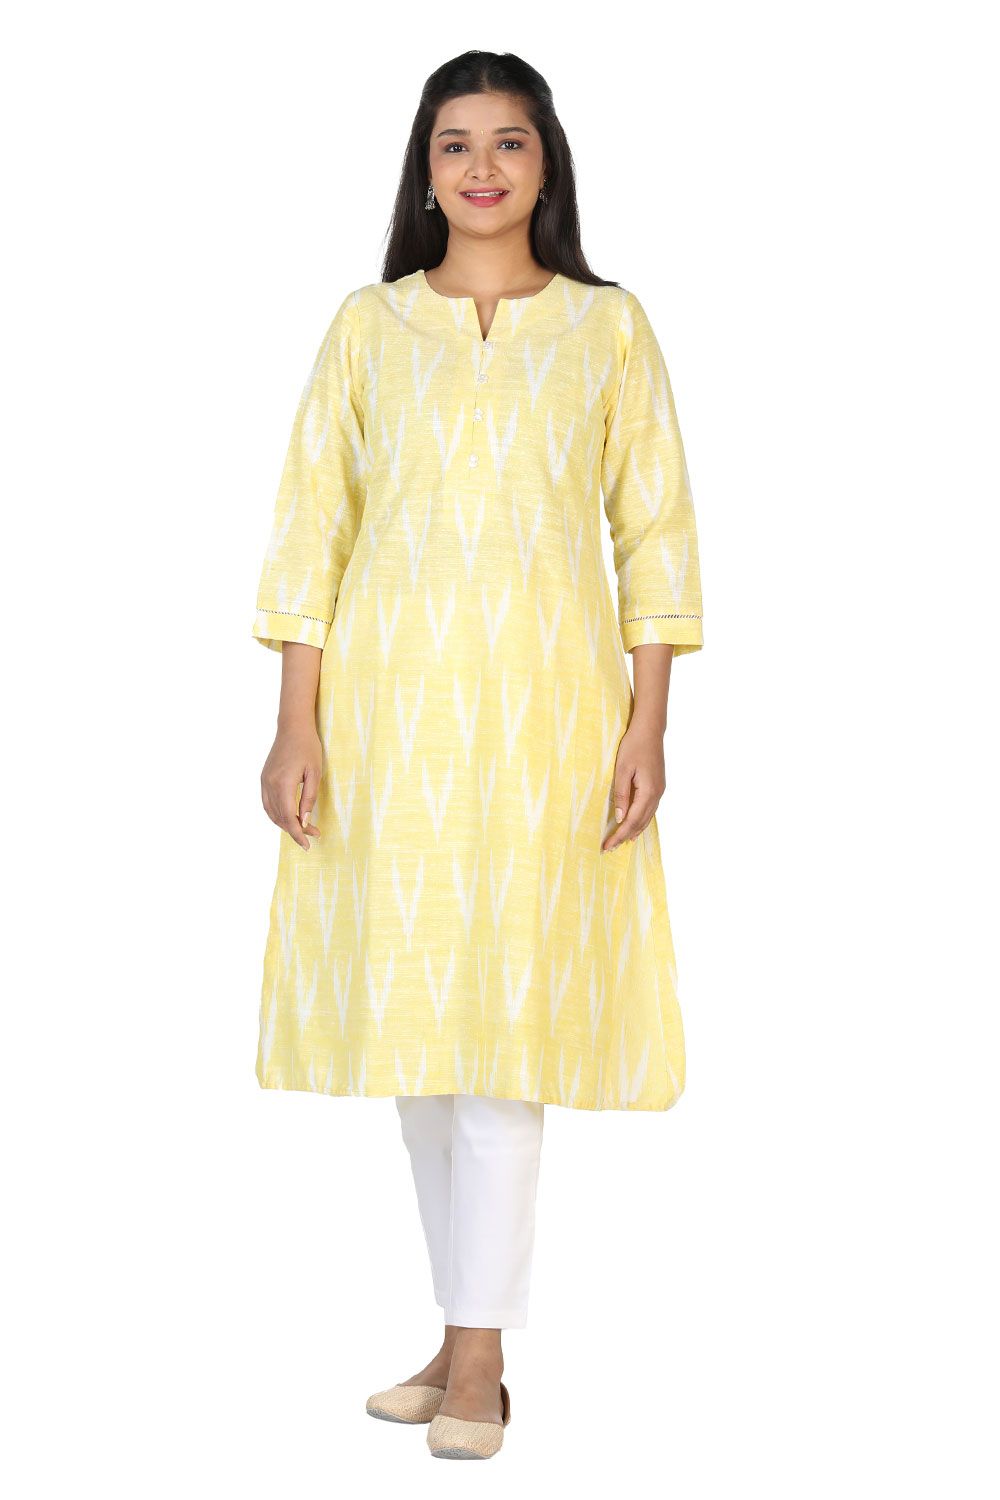 Buy Yellow Cotton Straight Long Kurta for Women Online at Fabindia |  10730979